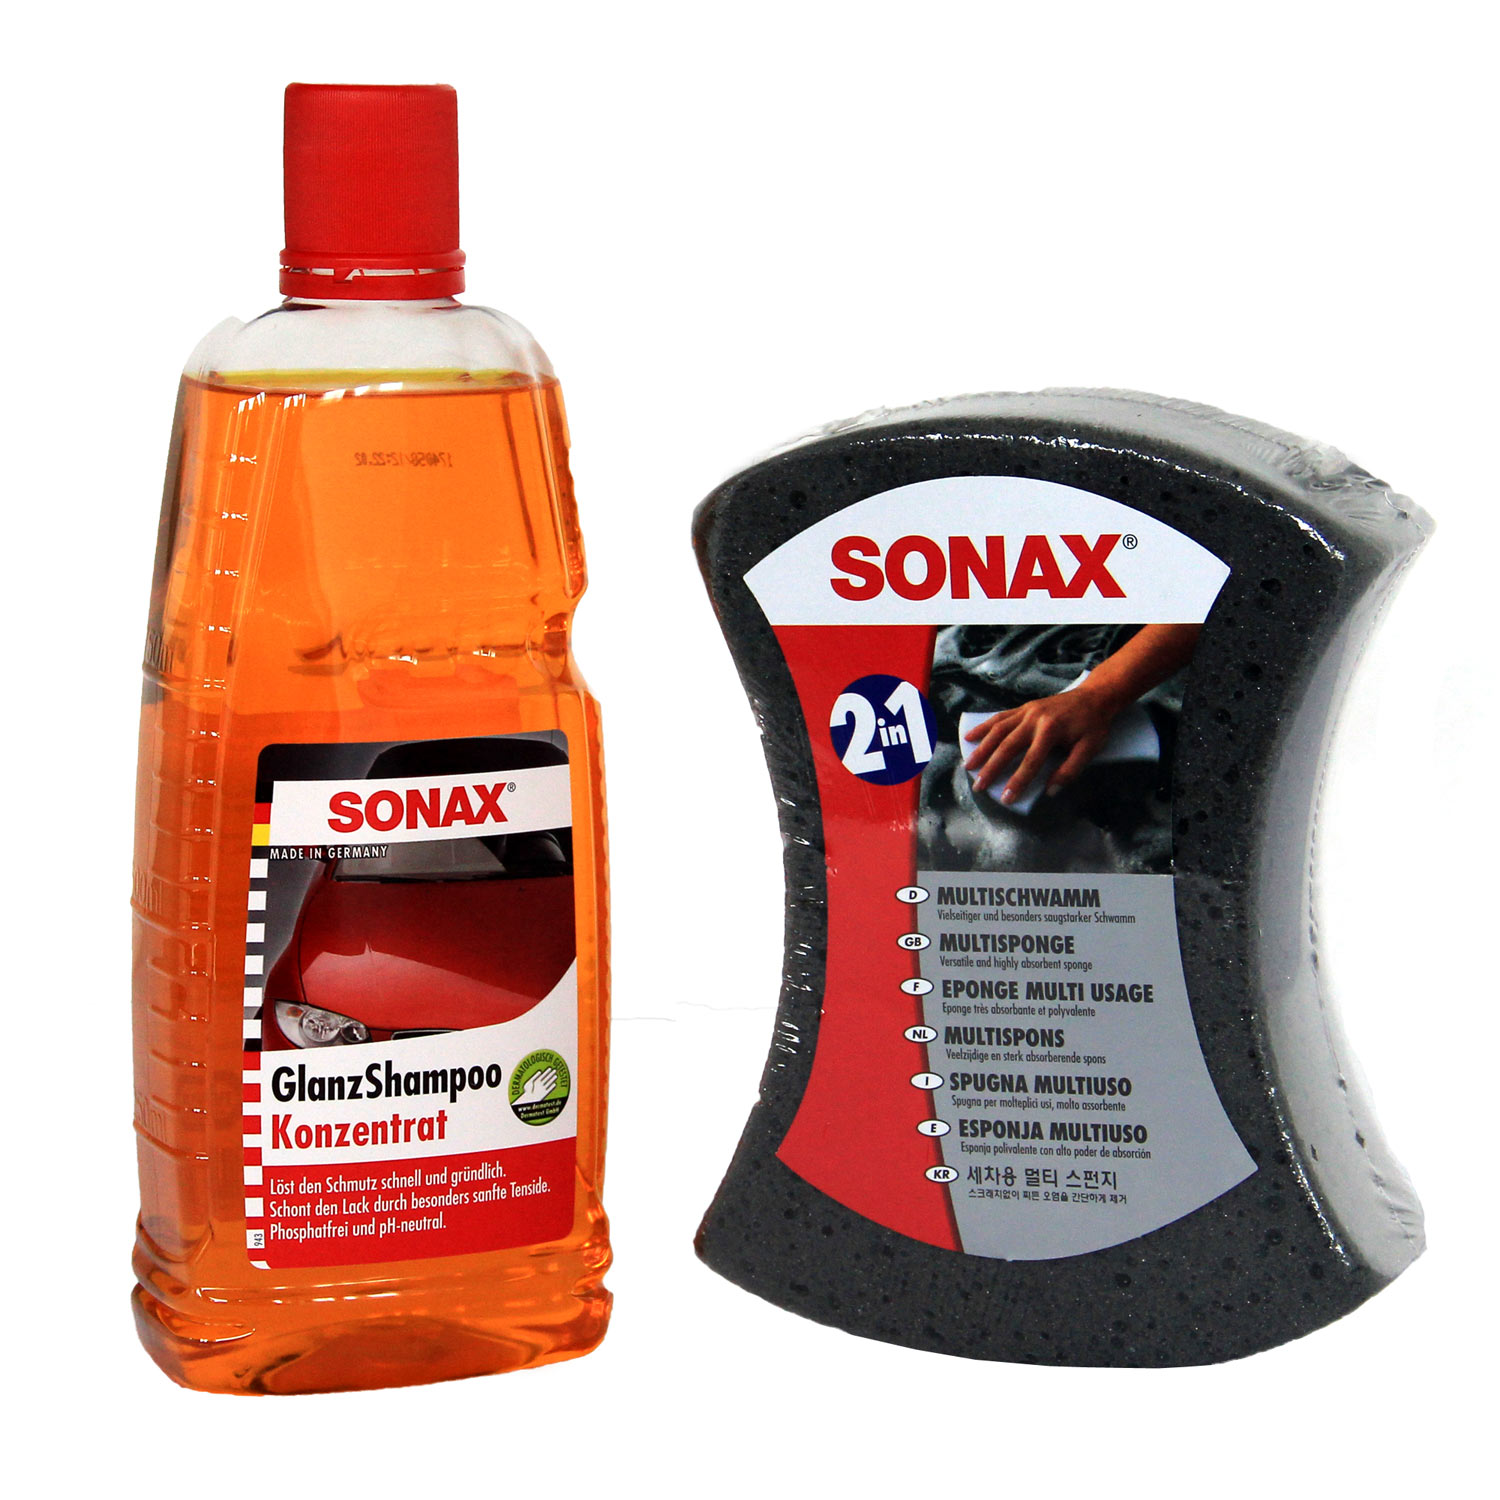 SONAX GlanzShampoo Auto-Shampoo Autoshampoo 1 Liter 314300 + Multischwamm 428000